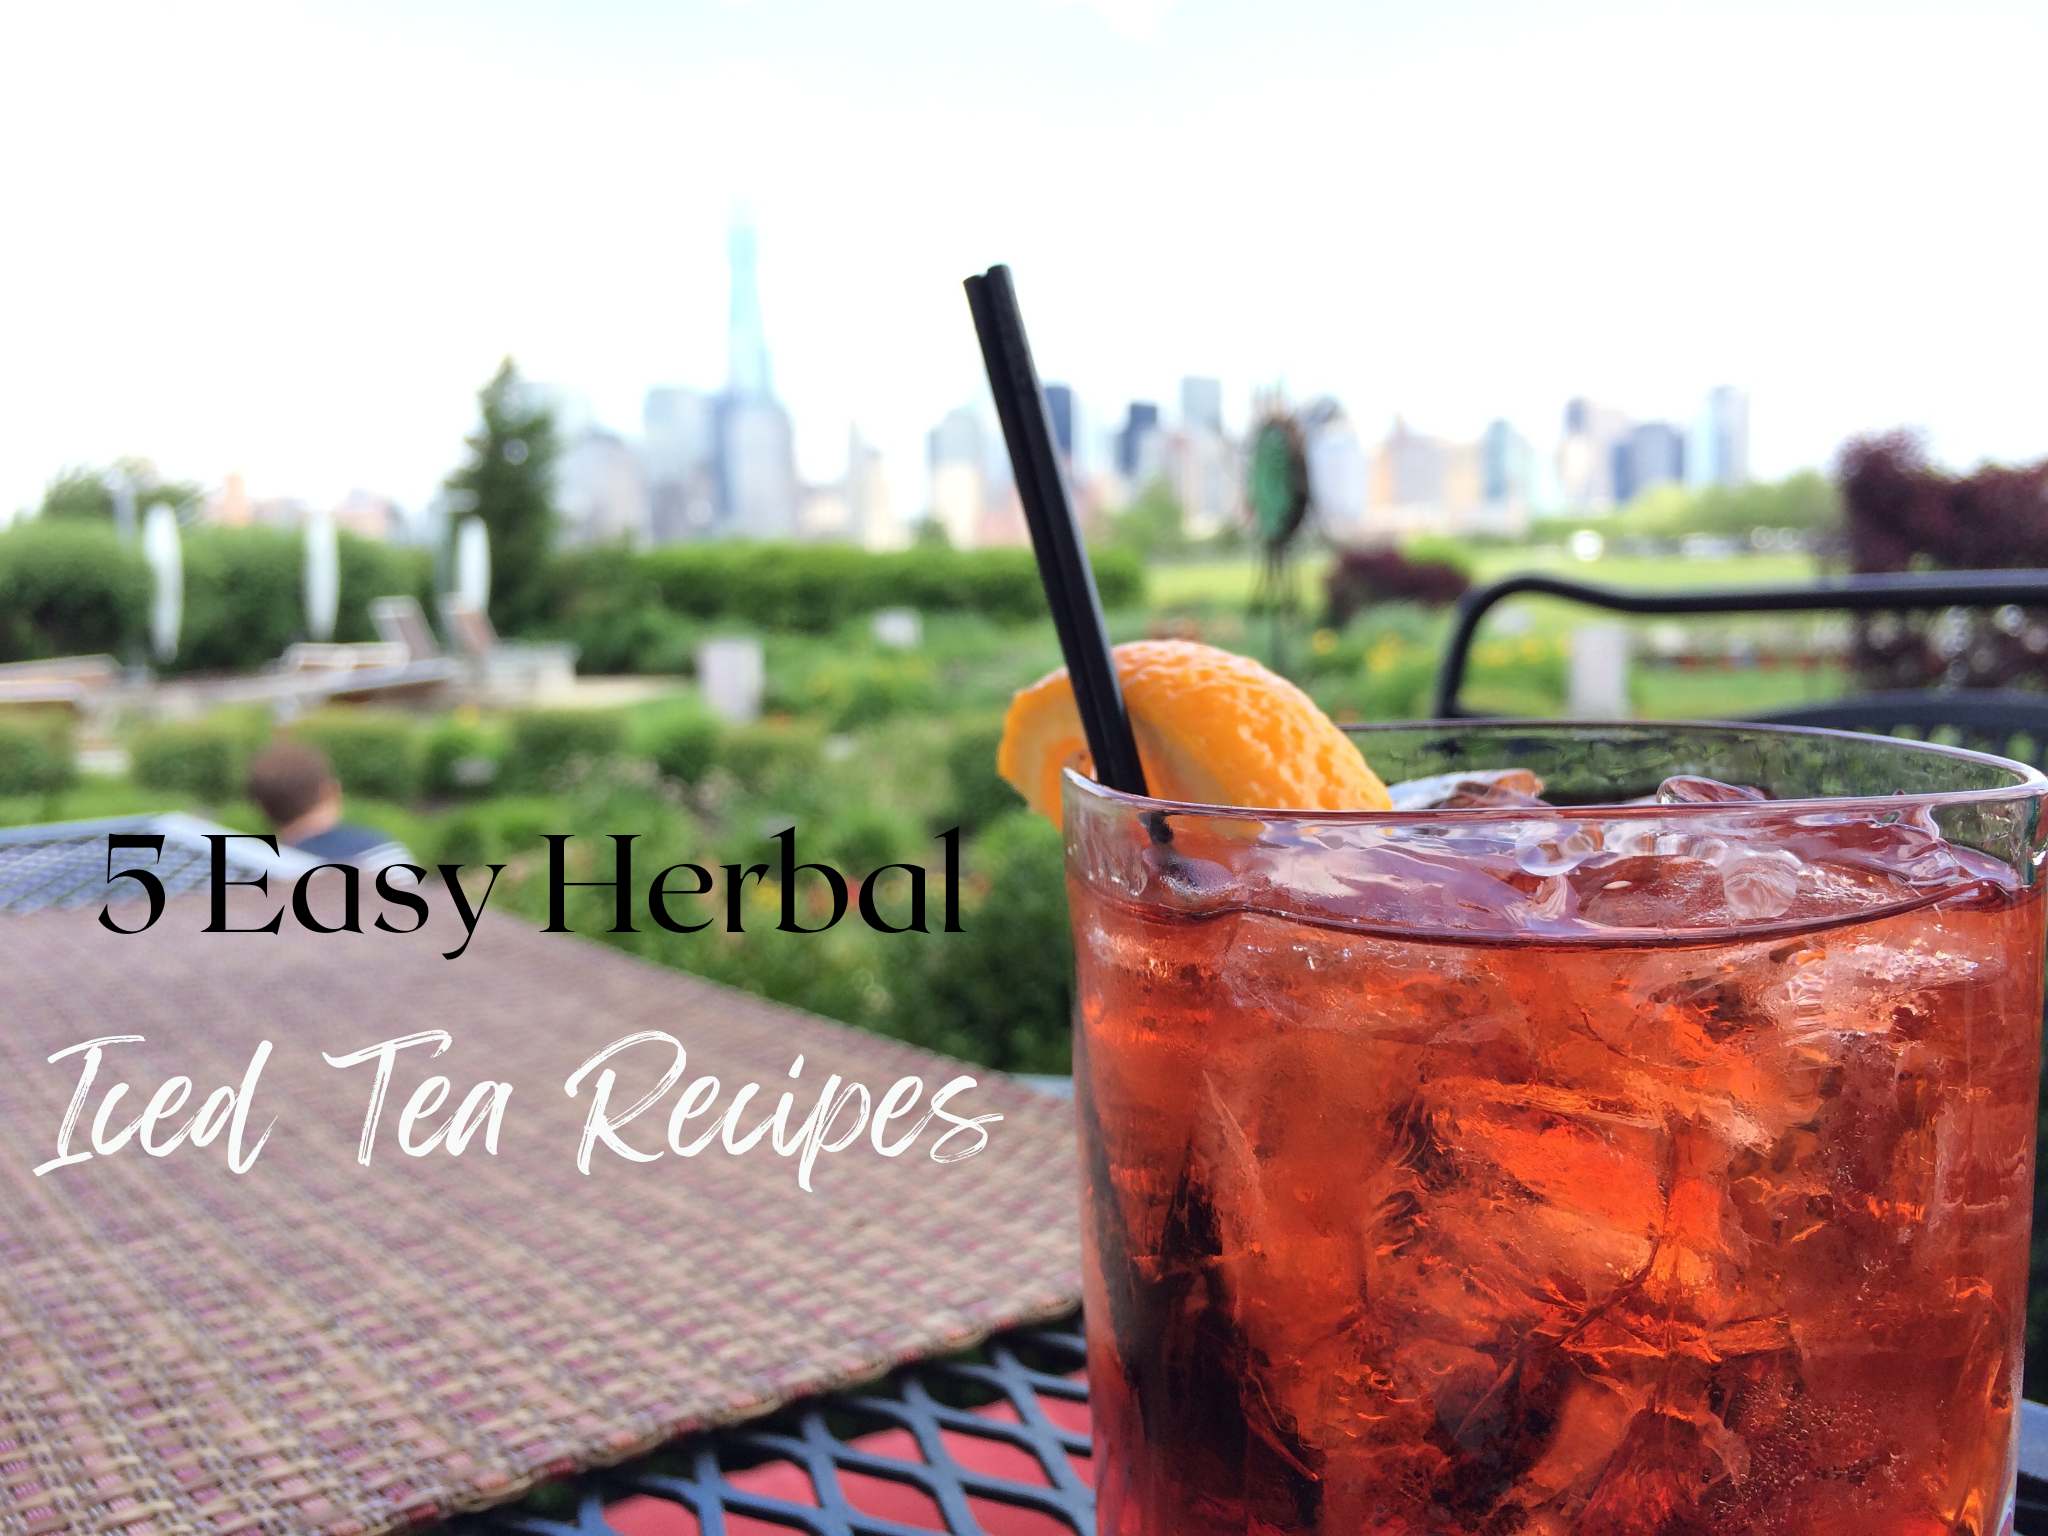 5 Easy Herbal Iced Tea Recipes